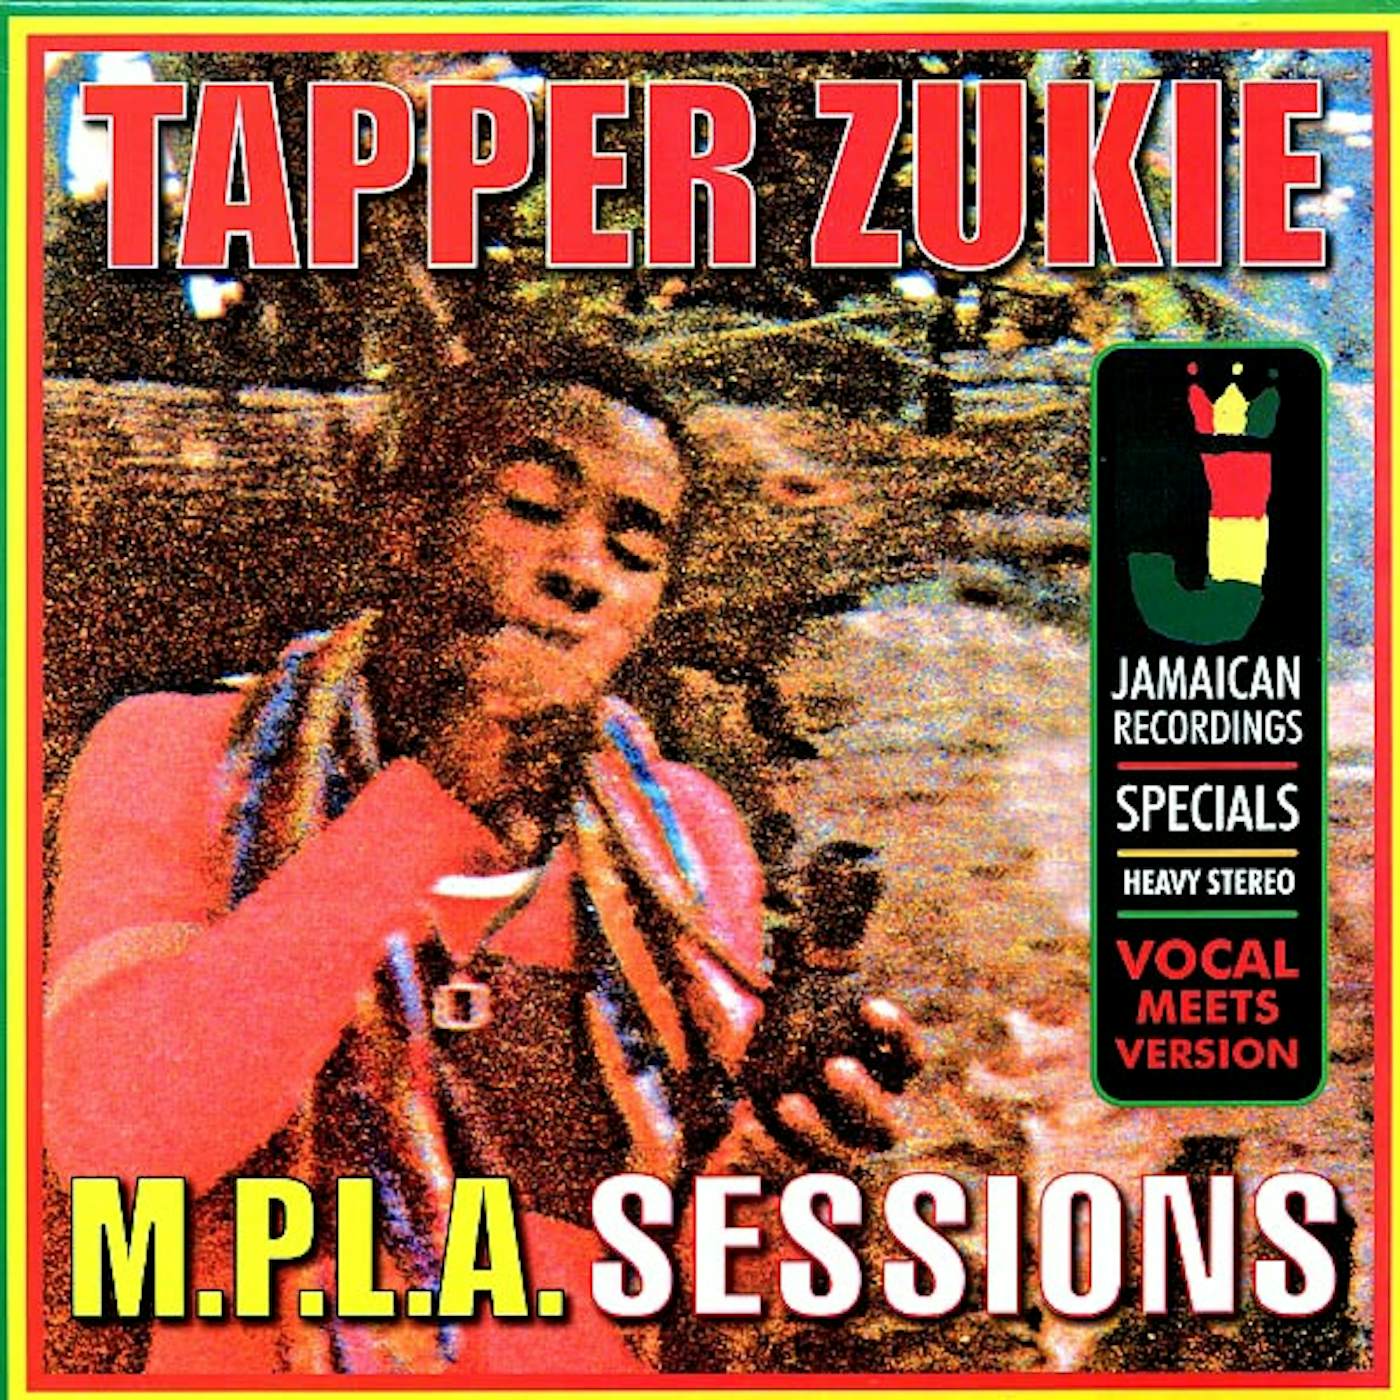 Tappa Zukie  LP -  MPLA Sessions RED VINYL (ltd. ed.) (180g) (colored vinyl)